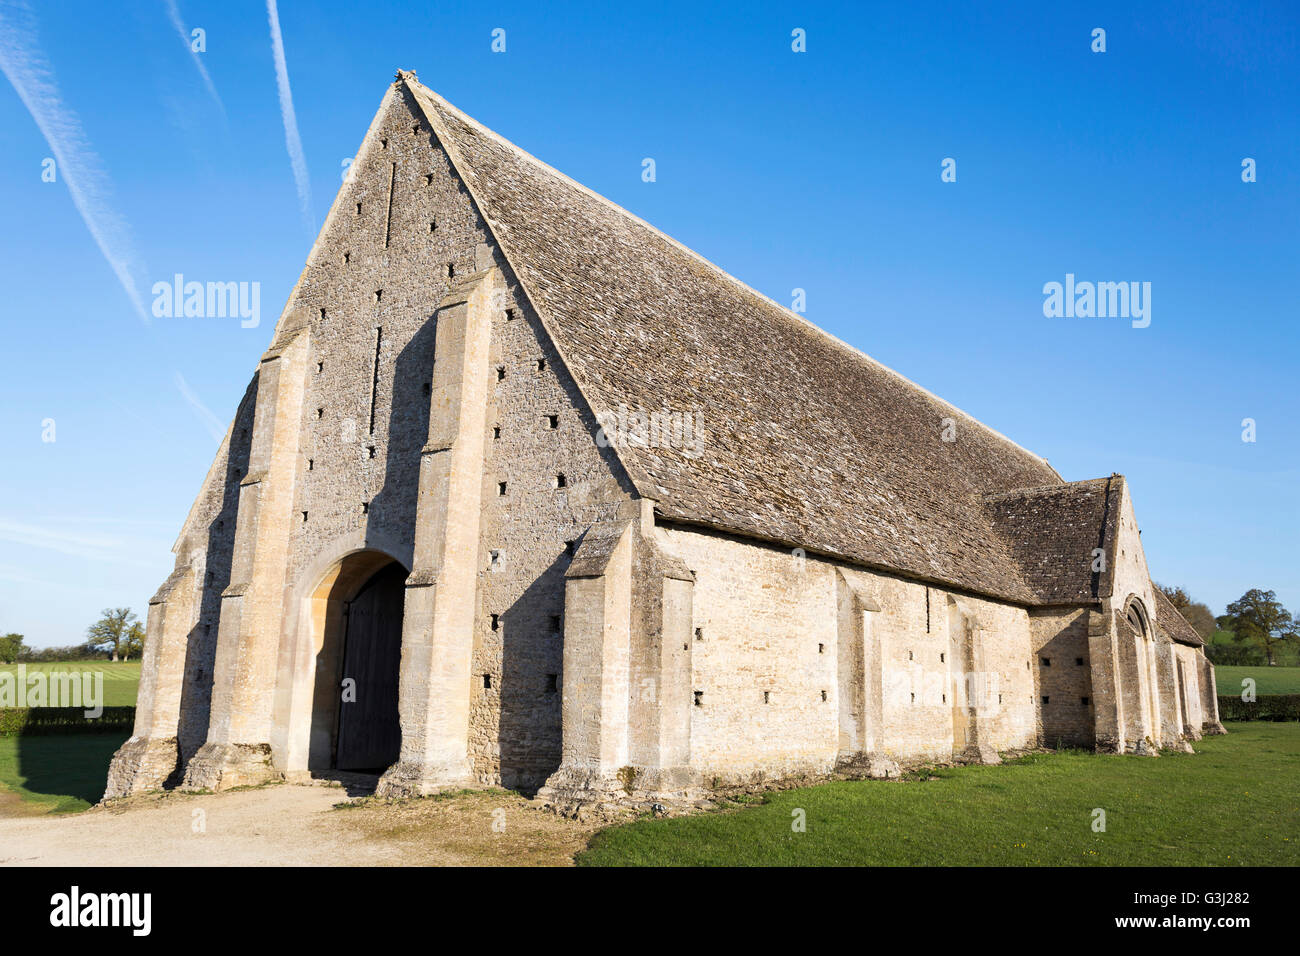 'Grande' Barn Coxwell, '13ème siècle' Grange monastique, Oxfordshire, England, UK Banque D'Images